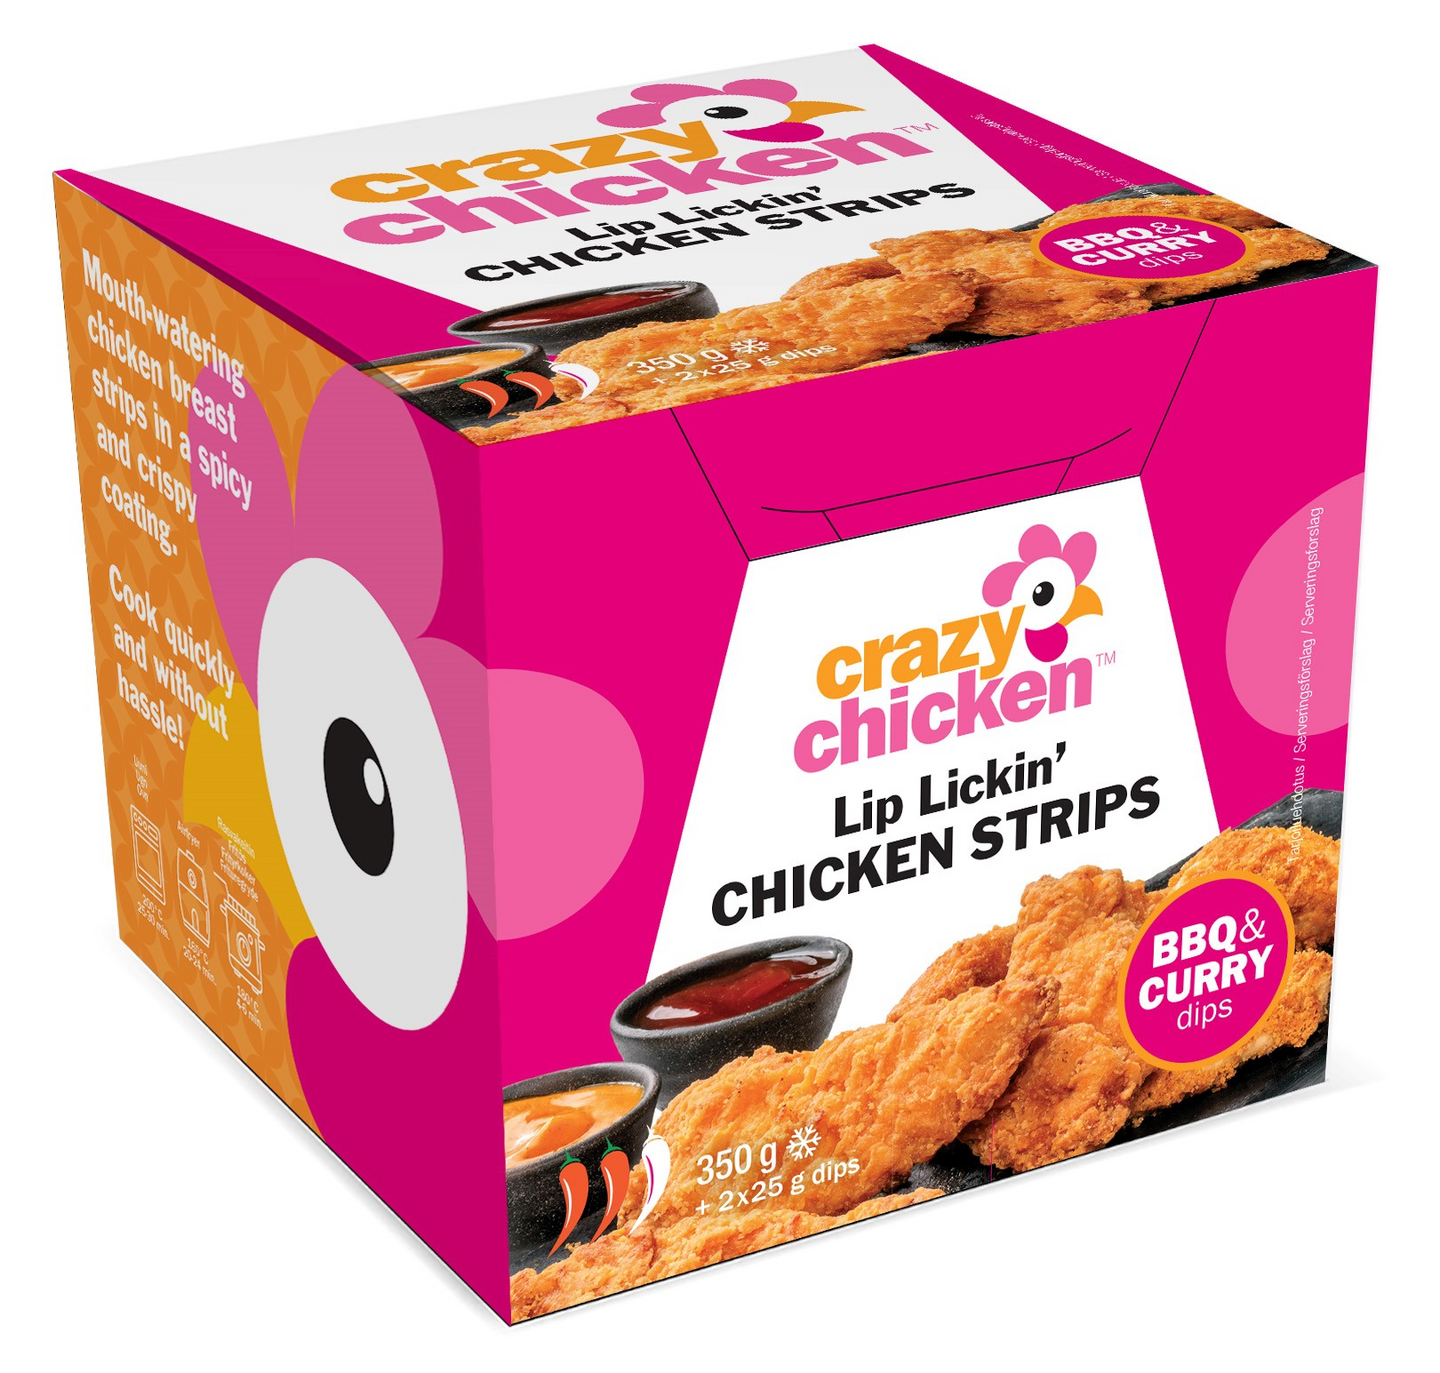 Crazy Chicken Lip Lickin' Chicken Strips paneroidut mausteiset rintafilepalat 350g + kastike pakaste